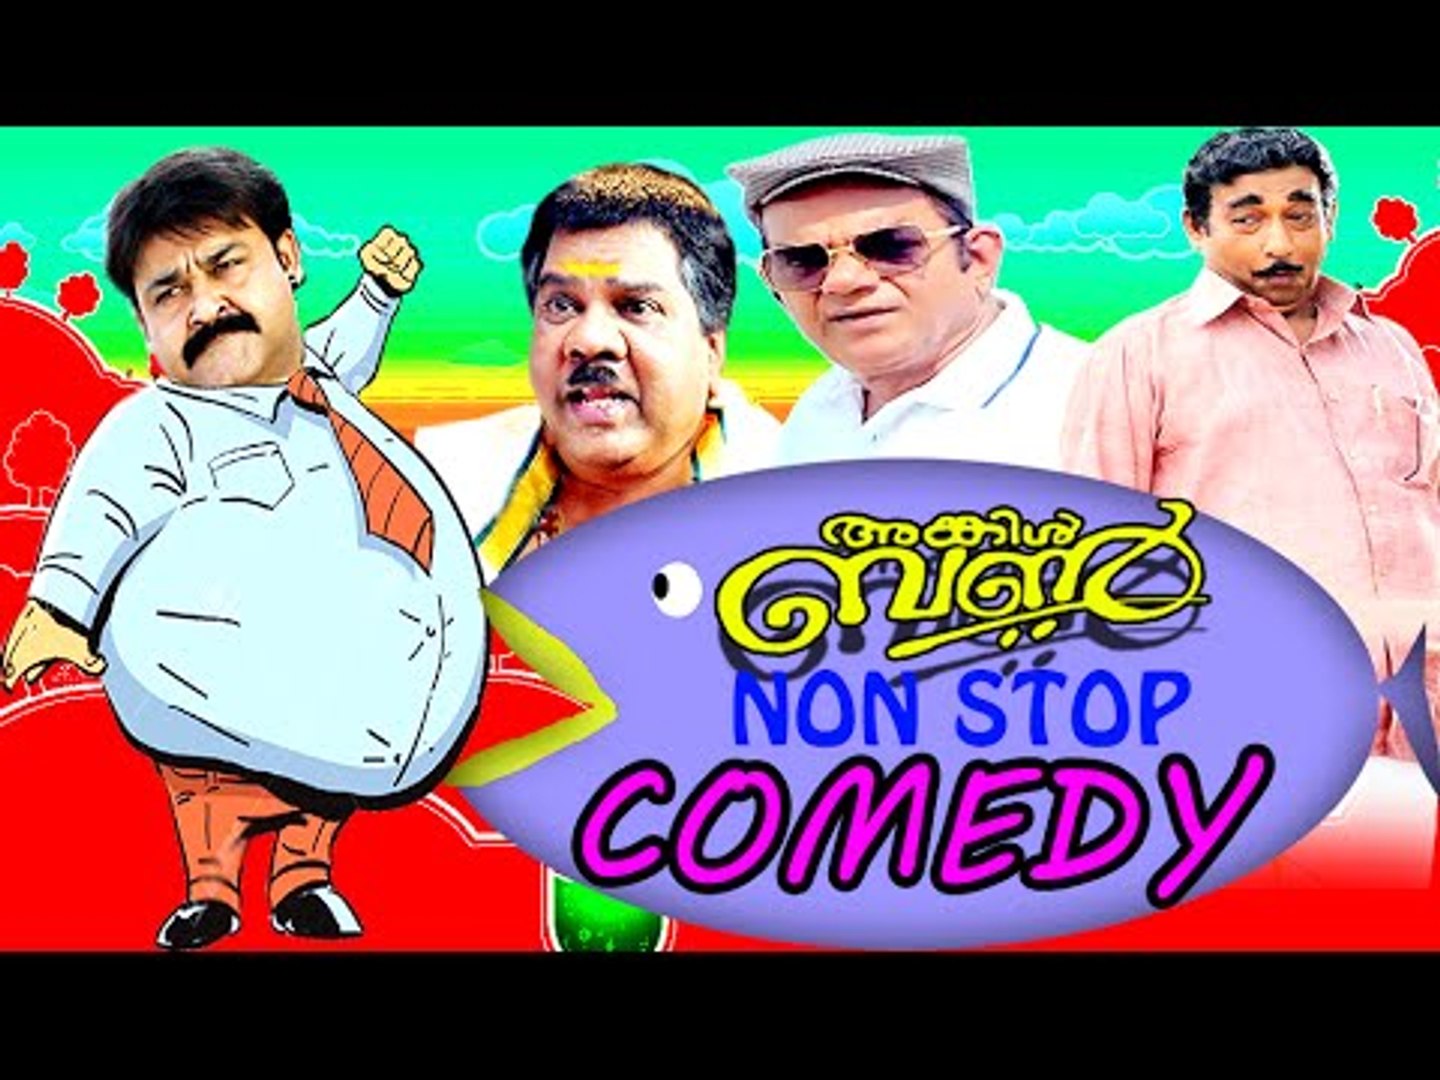 Malayalam Movie Non Stop Comedy Scenes | Uncle Bun | Malayalam Comedy Scenes Malayalam Comedy Movies